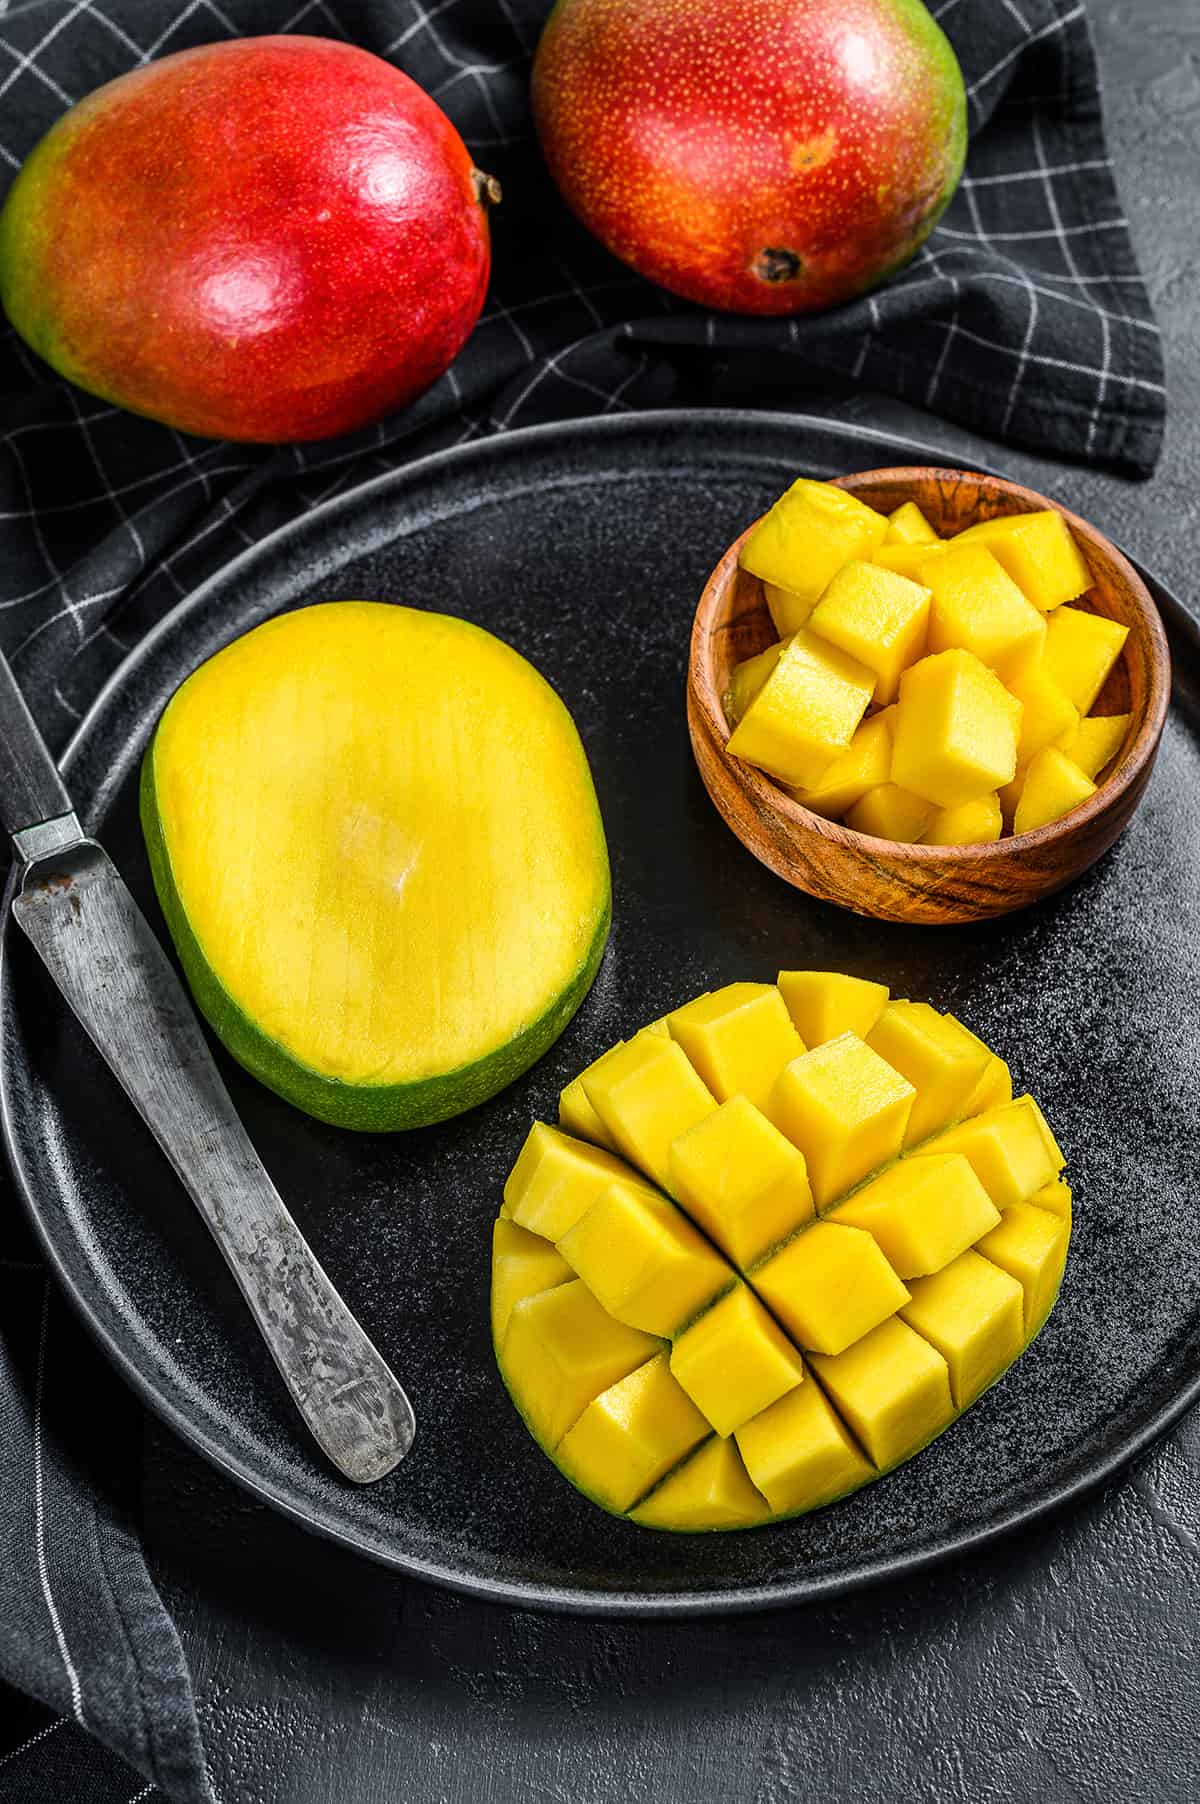 Ripe mango cut into cubes